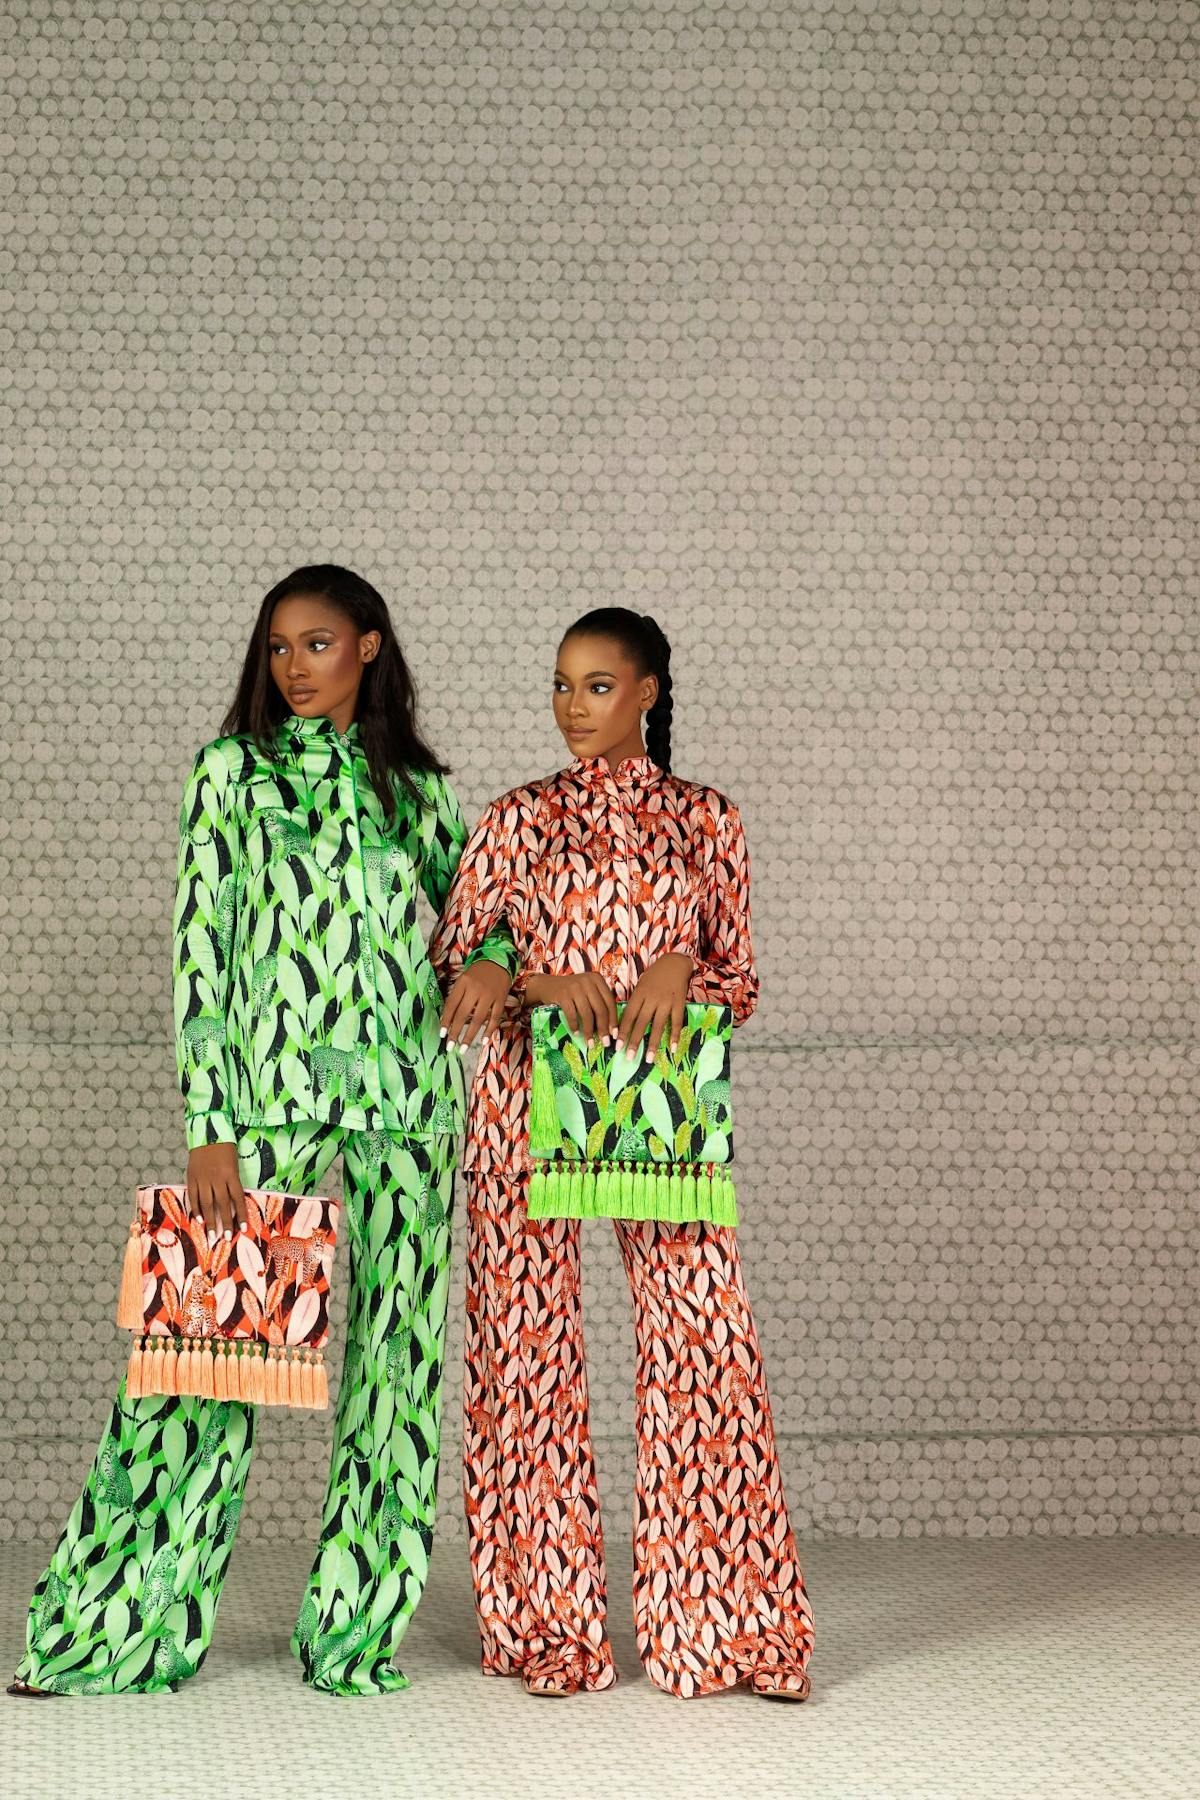 Nigerian fashion designer Banke Kuku is paving the way for African fashion